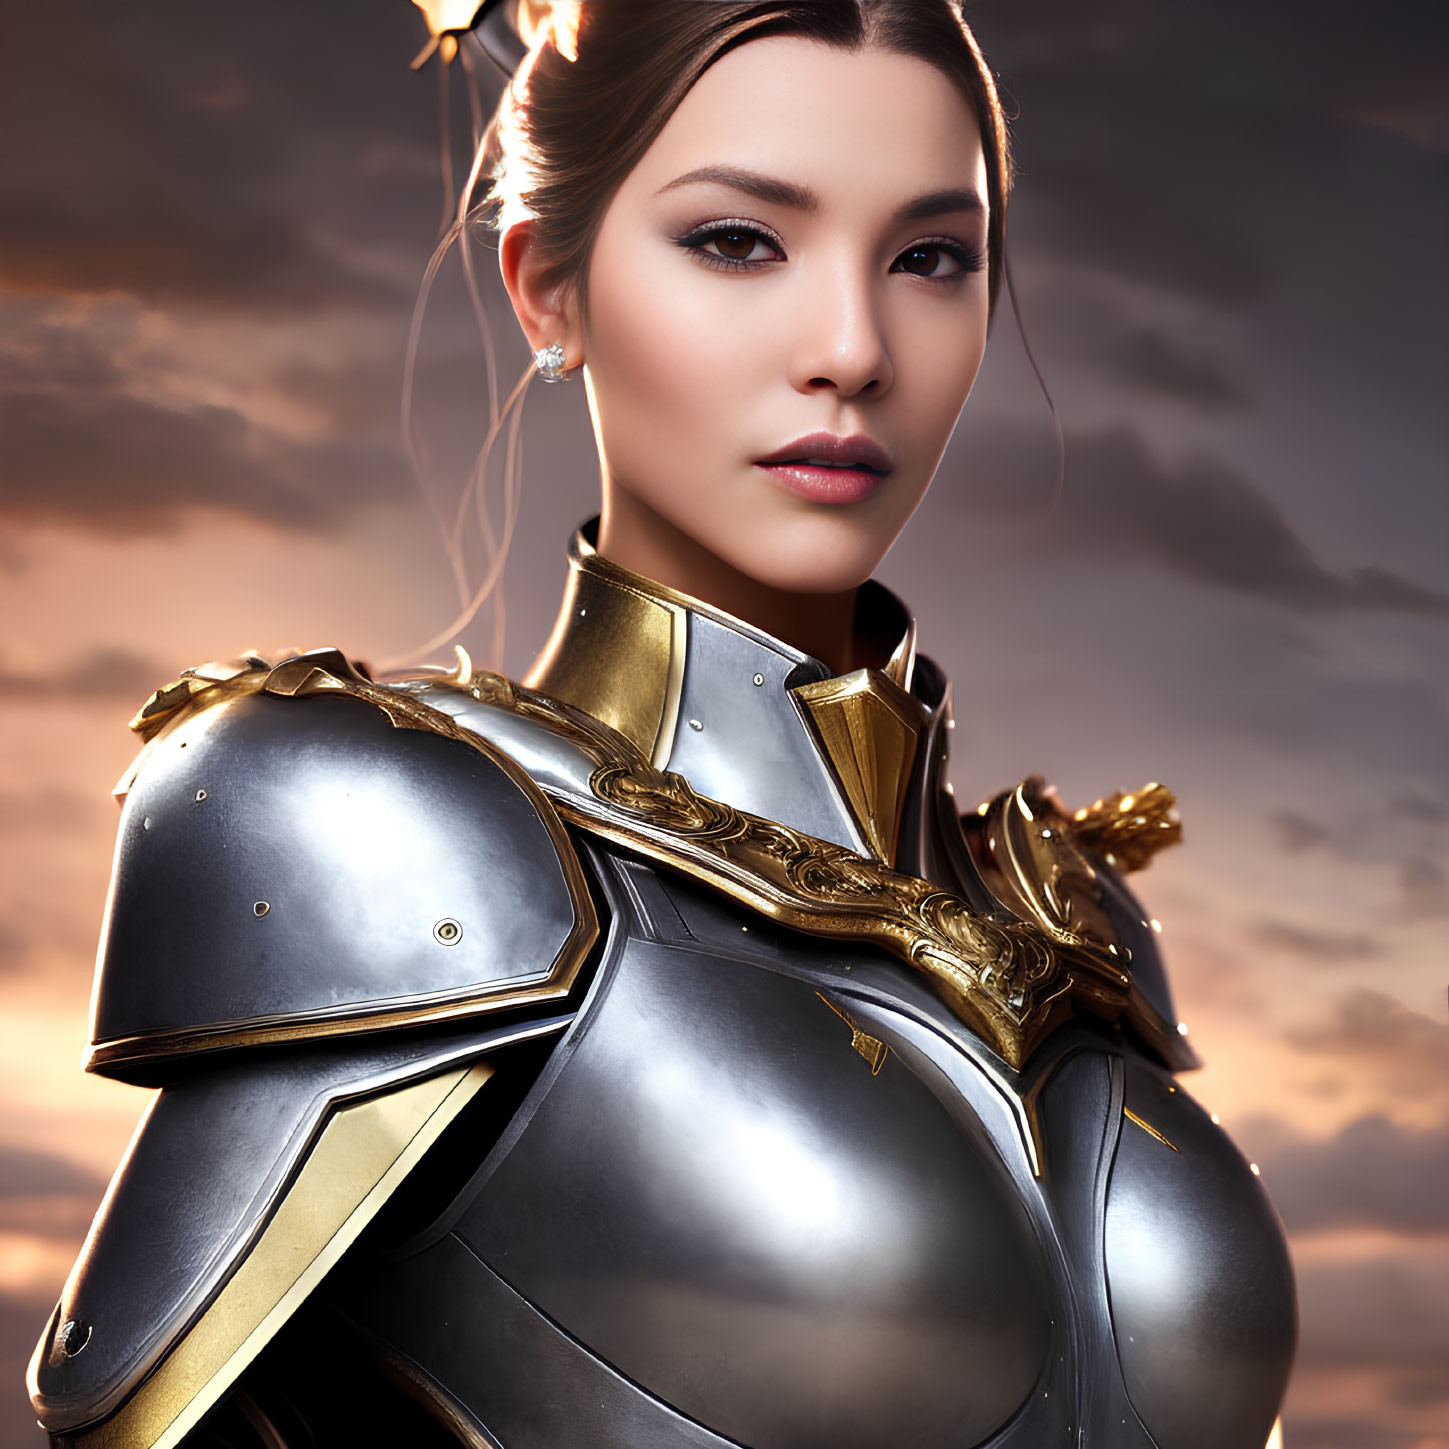 Asian woman in fantasy armor under dramatic sky